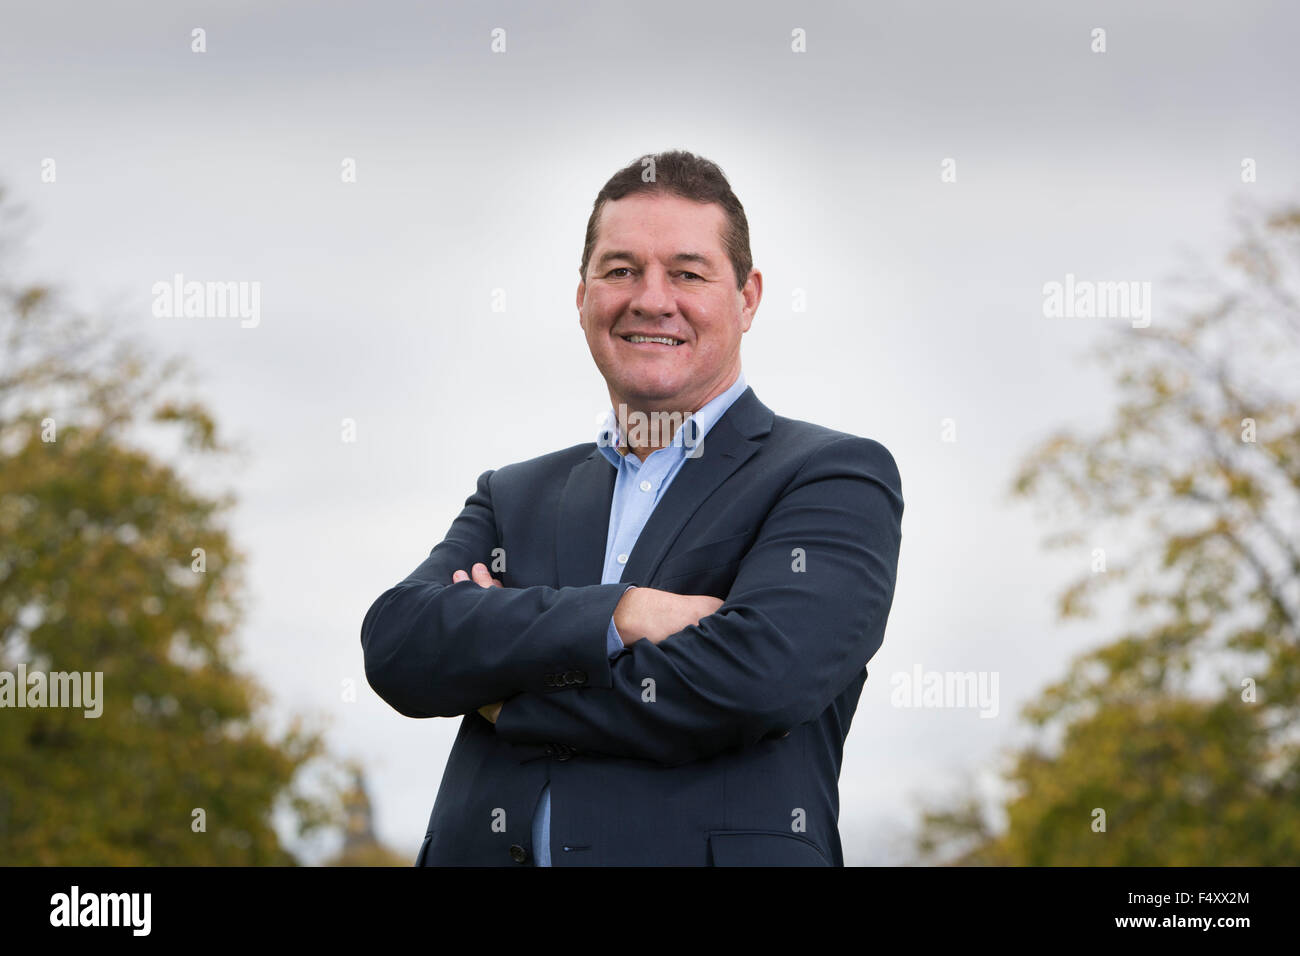 Rugby World Cup 2015 Direktor David Pickering Porträts. Stockfoto